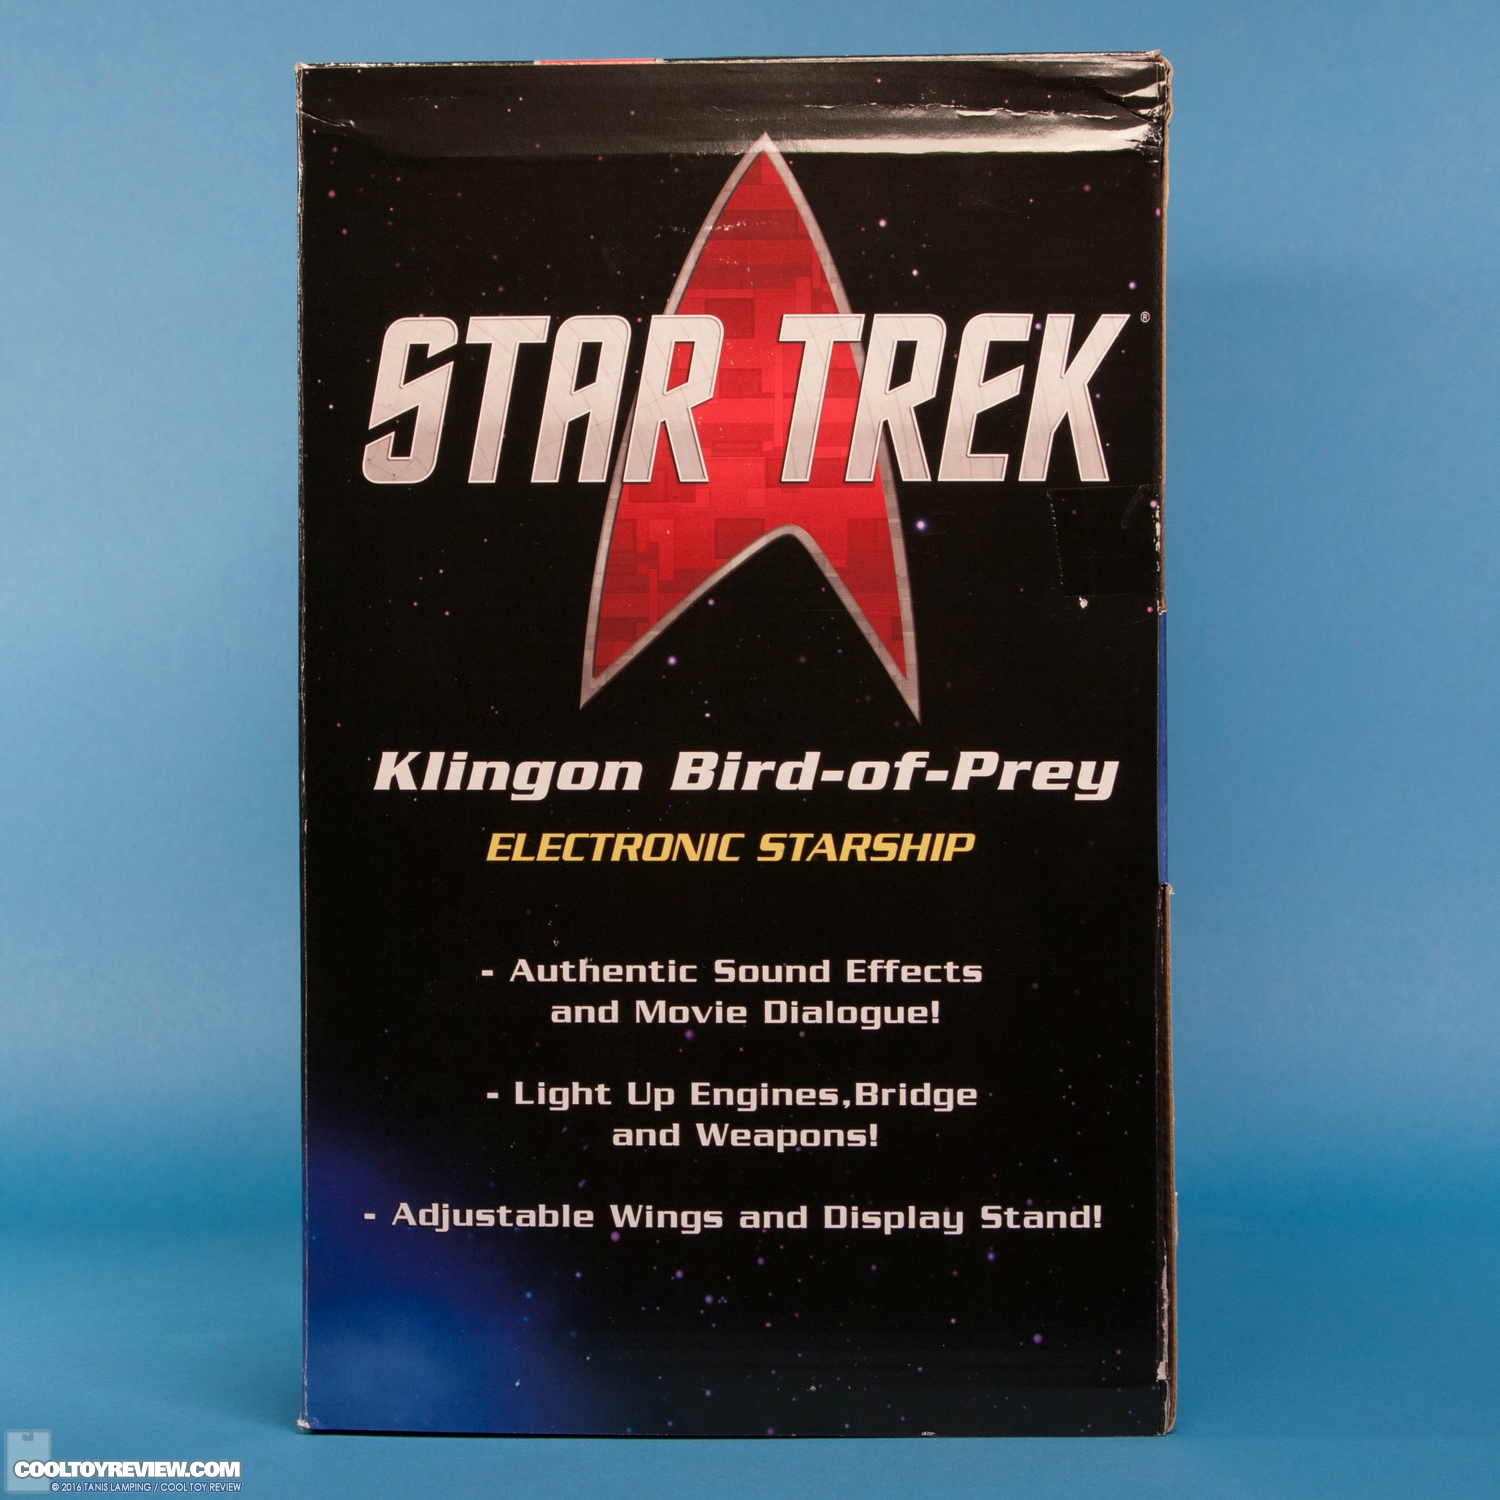 klingon-bird-of-prey-electronic-starship-diamond-select-toys-016.jpg